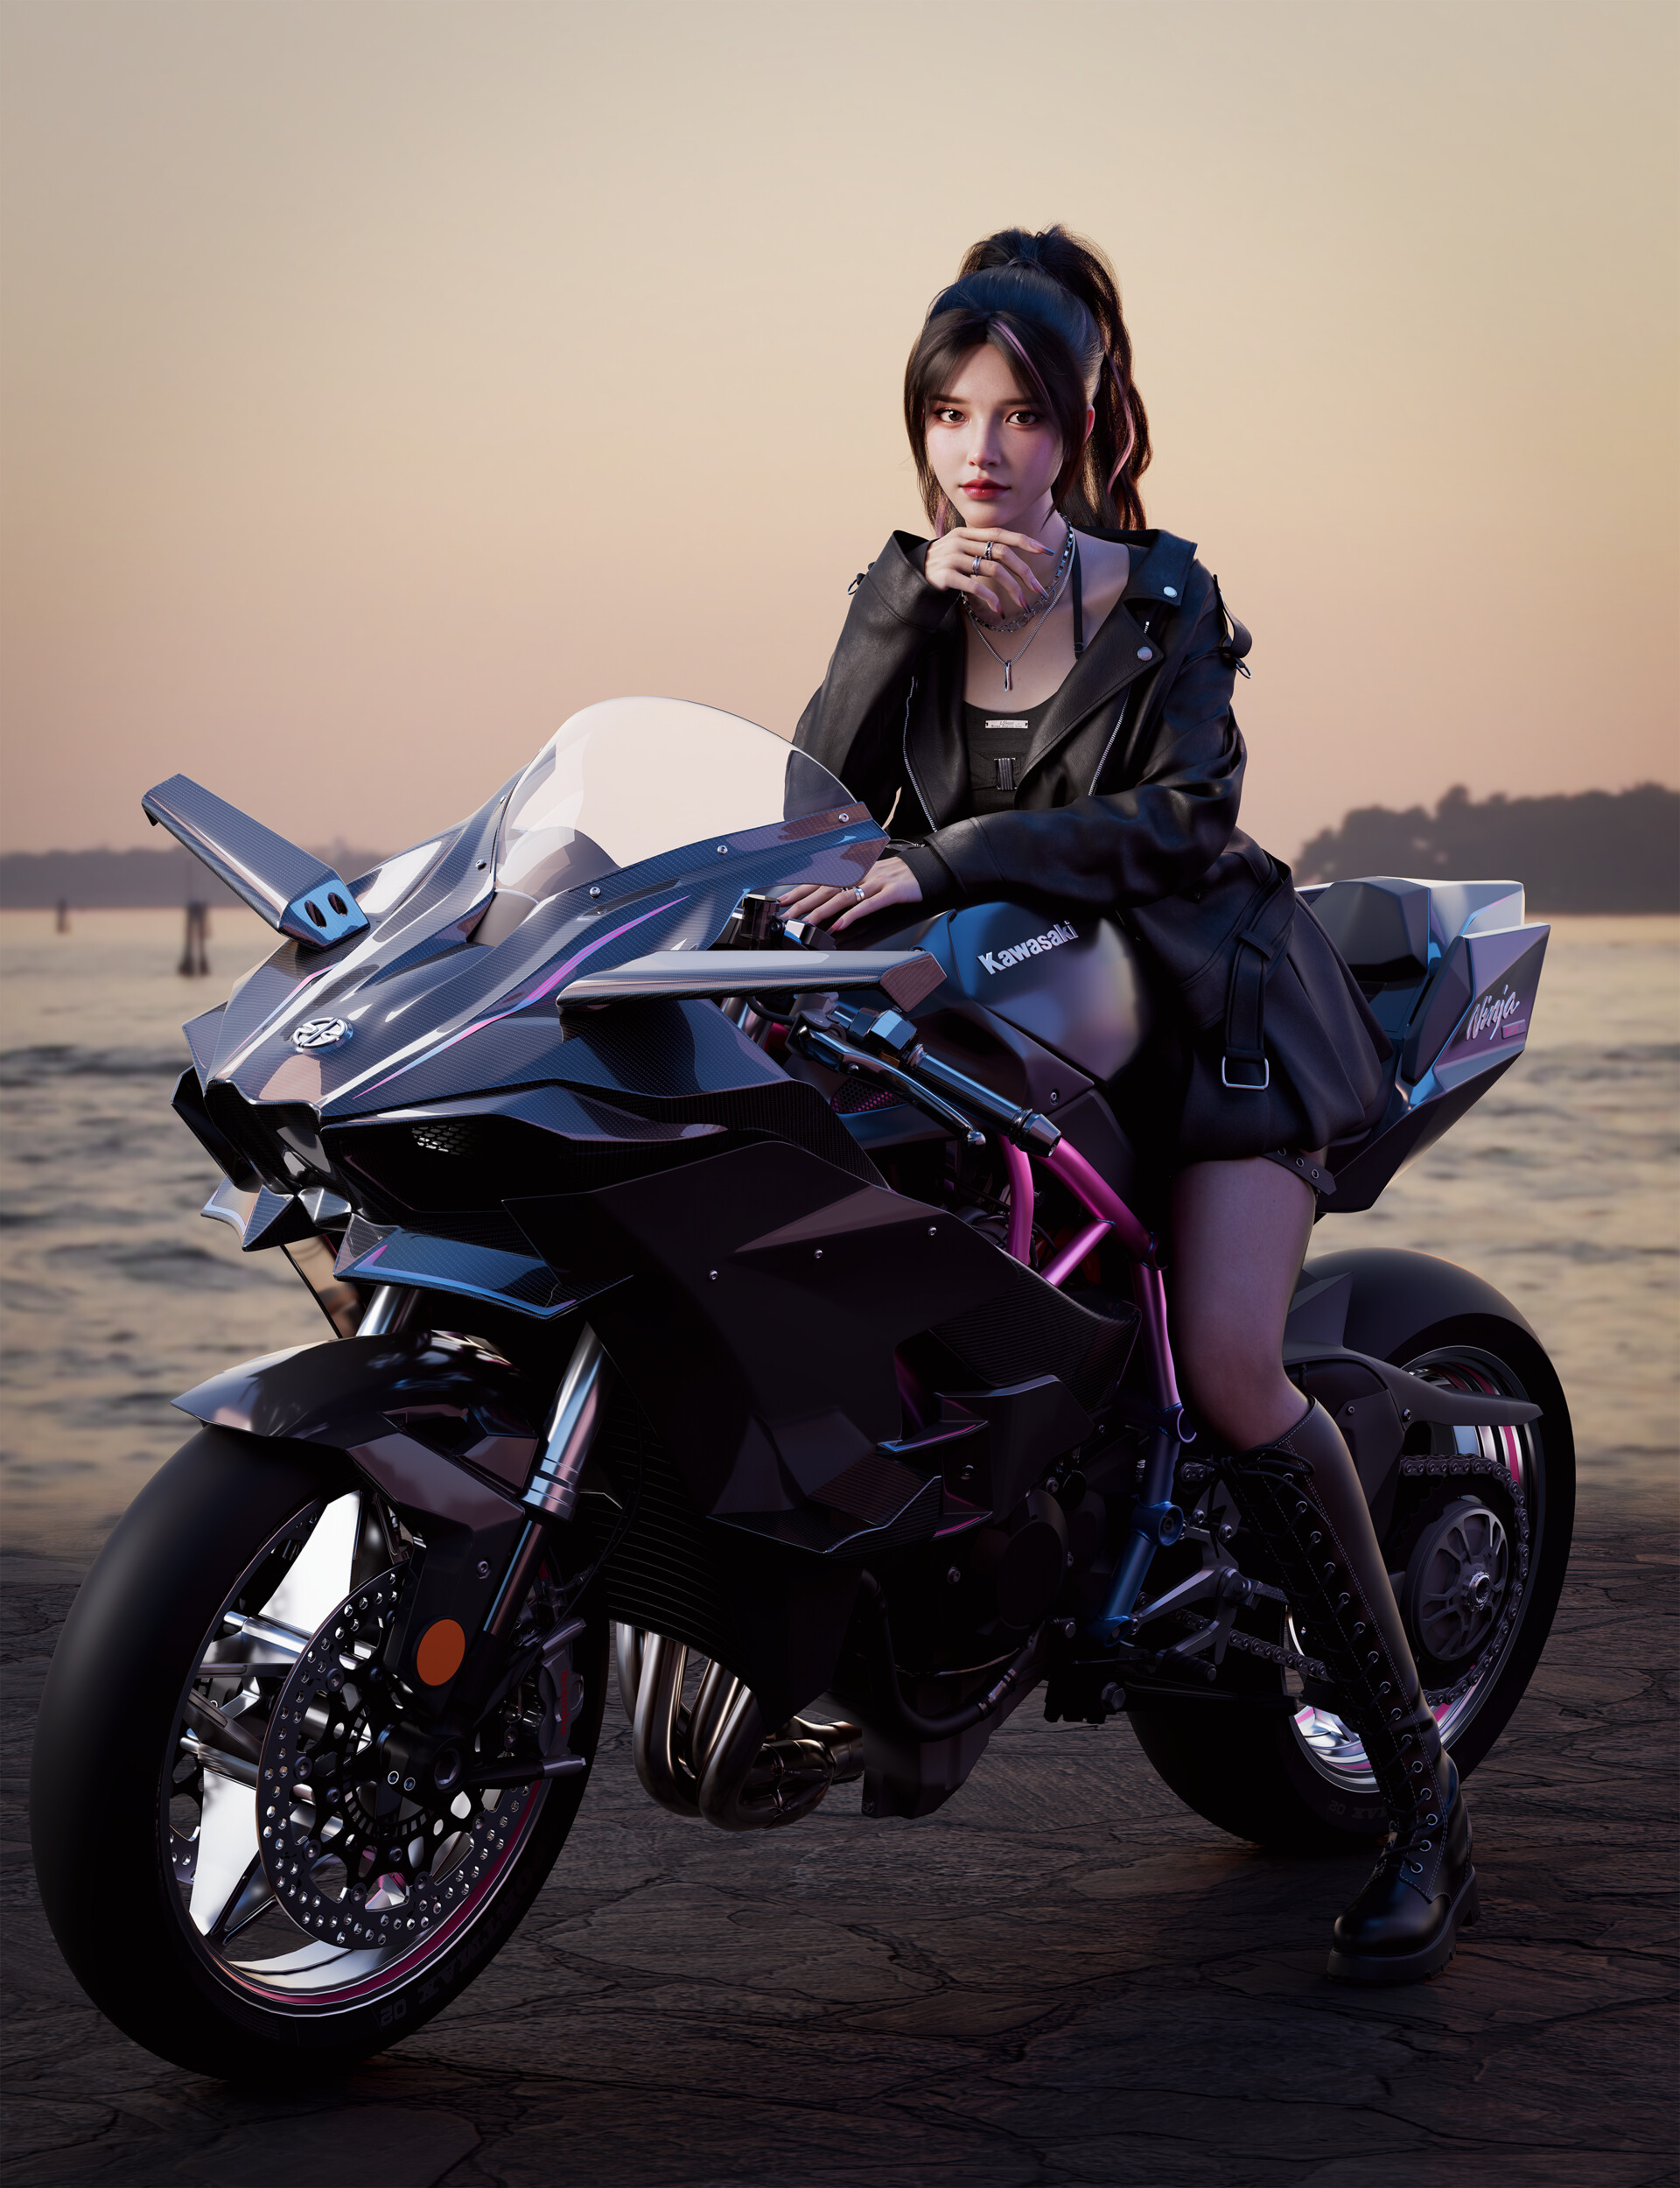 Shuai Liu Women CGi Digital Art Motorcycle Jacket Beach Ocean View Illustration Vertical Kawasaki 1920x2500